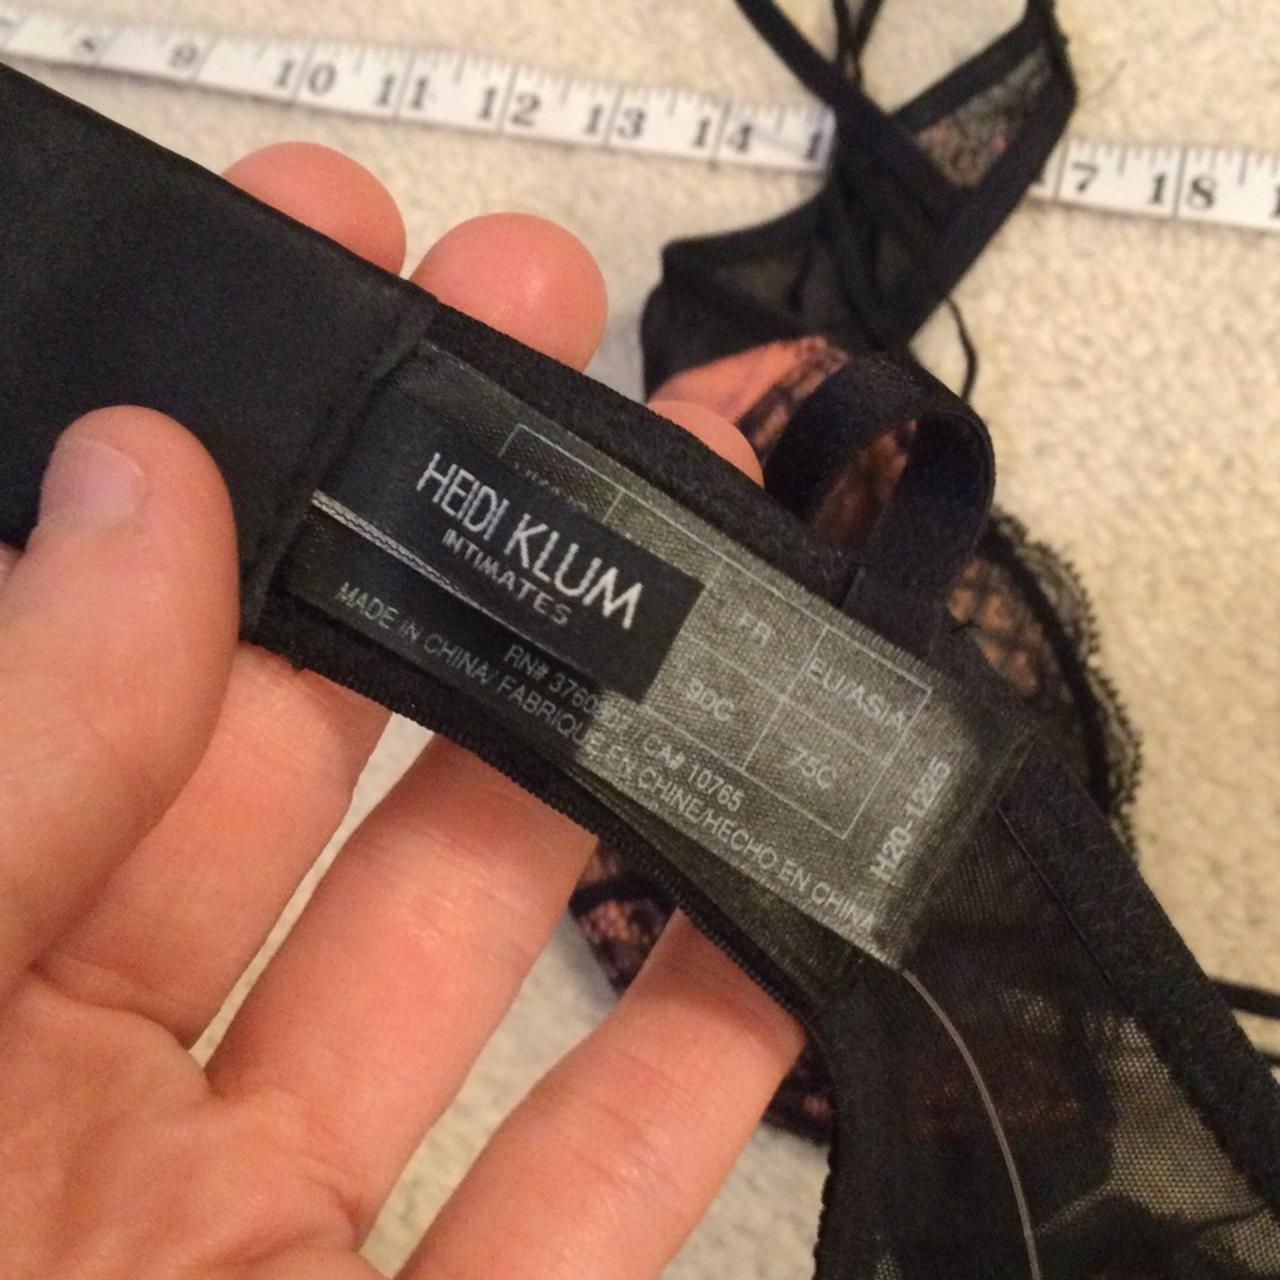 Product Image 4 - Heidi Klamath intimates new $95